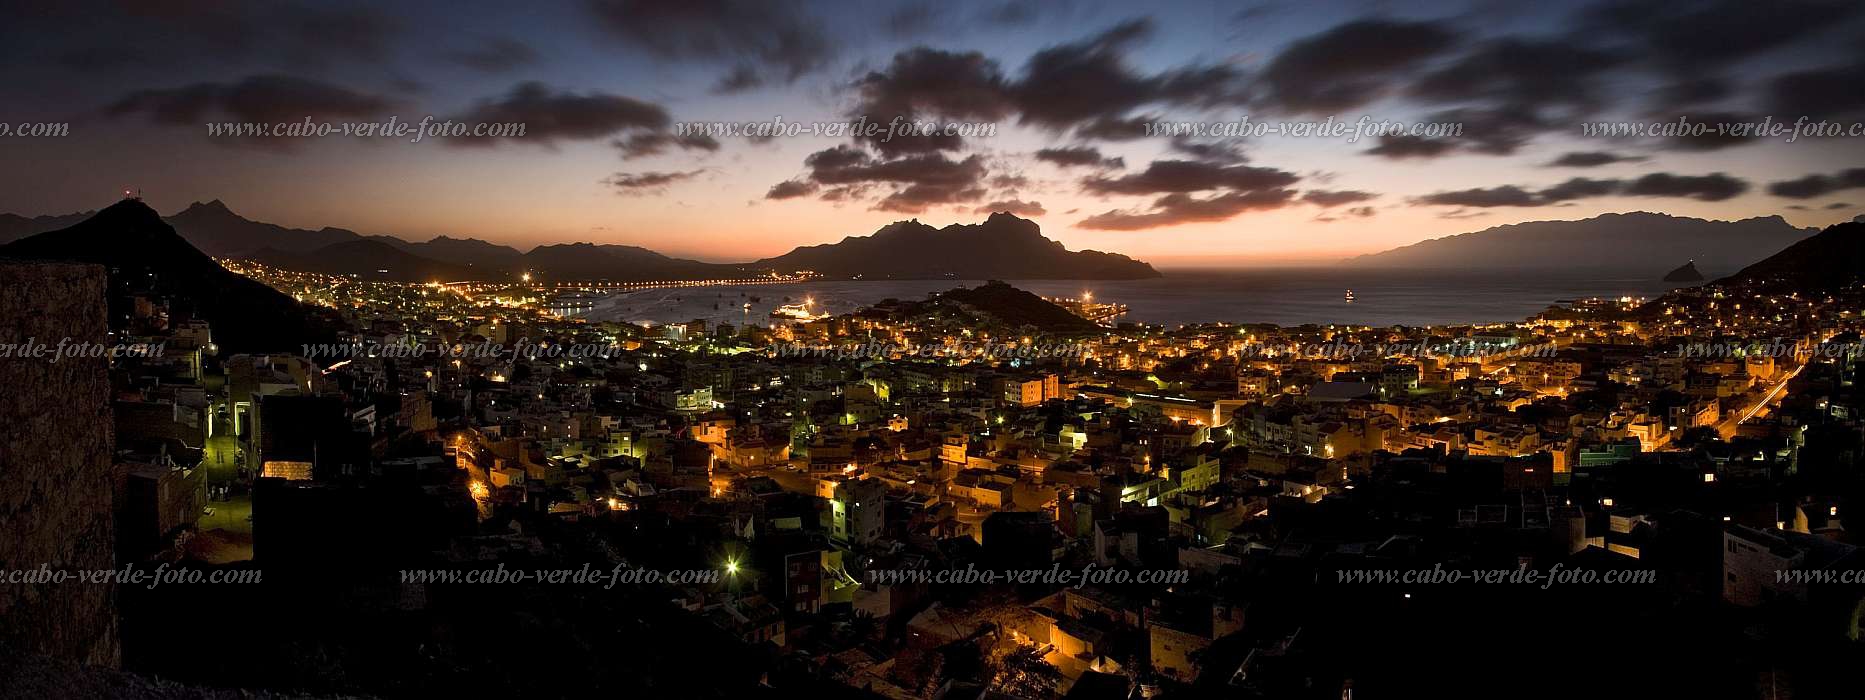 Insel: So Vicente  Wanderweg:  Ort: Mindelo Motiv: Stadtansicht Motivgruppe: Landscape Town © Florian Drmer www.Cabo-Verde-Foto.com